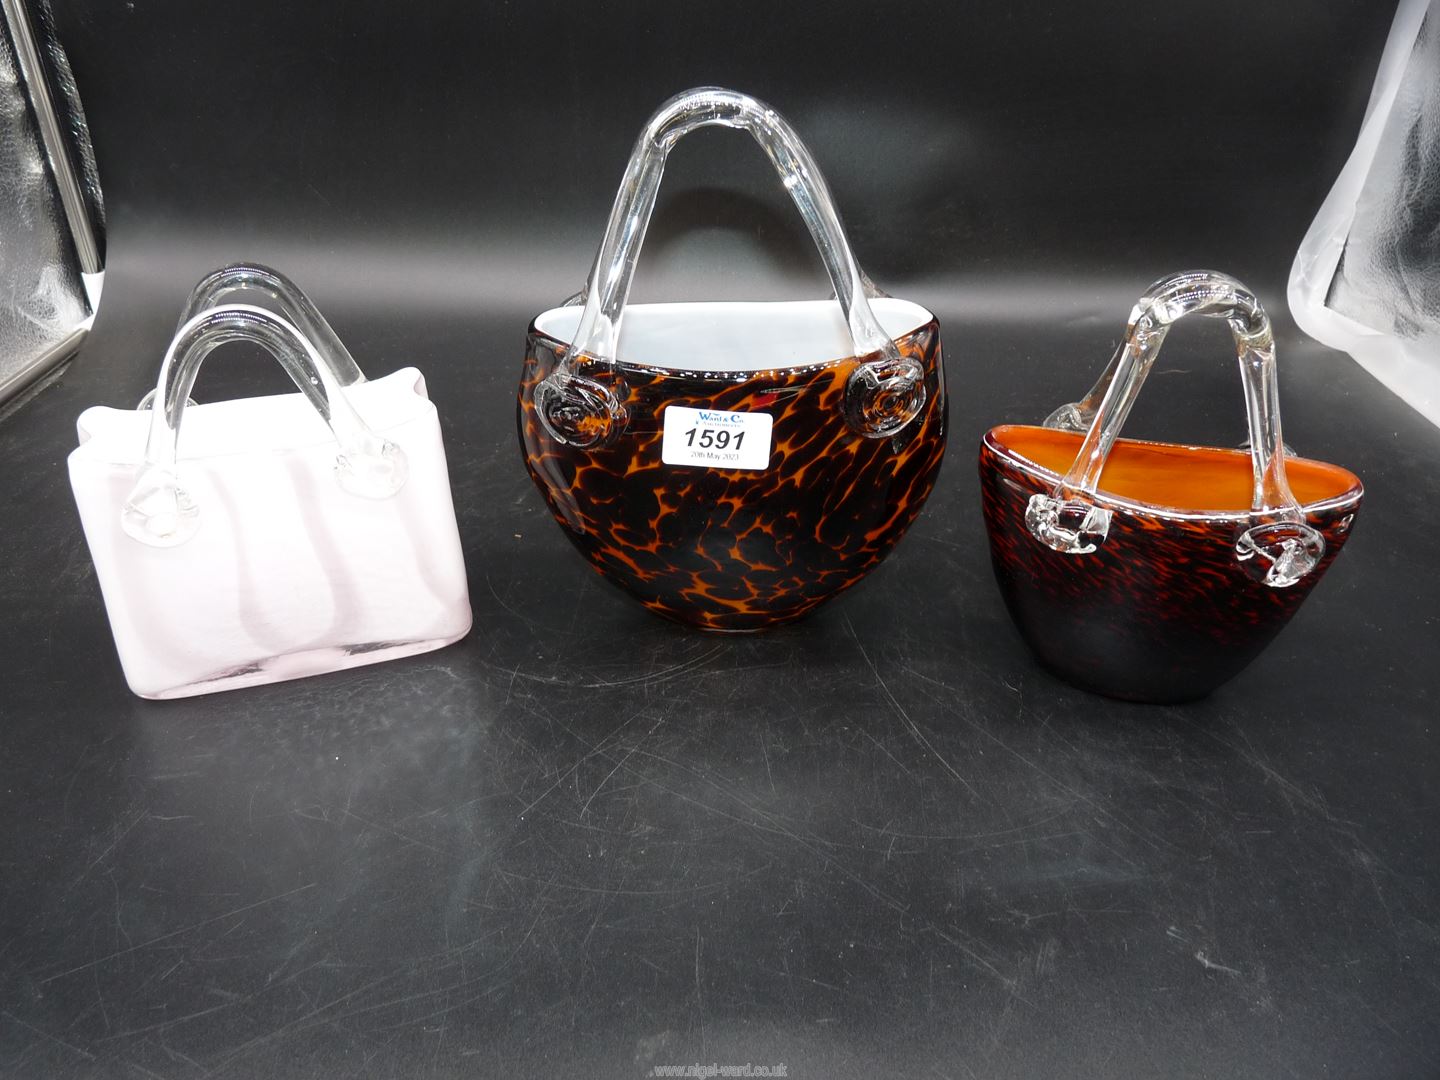 Three Laguna glass handbags from the 'Handbag Collection'.